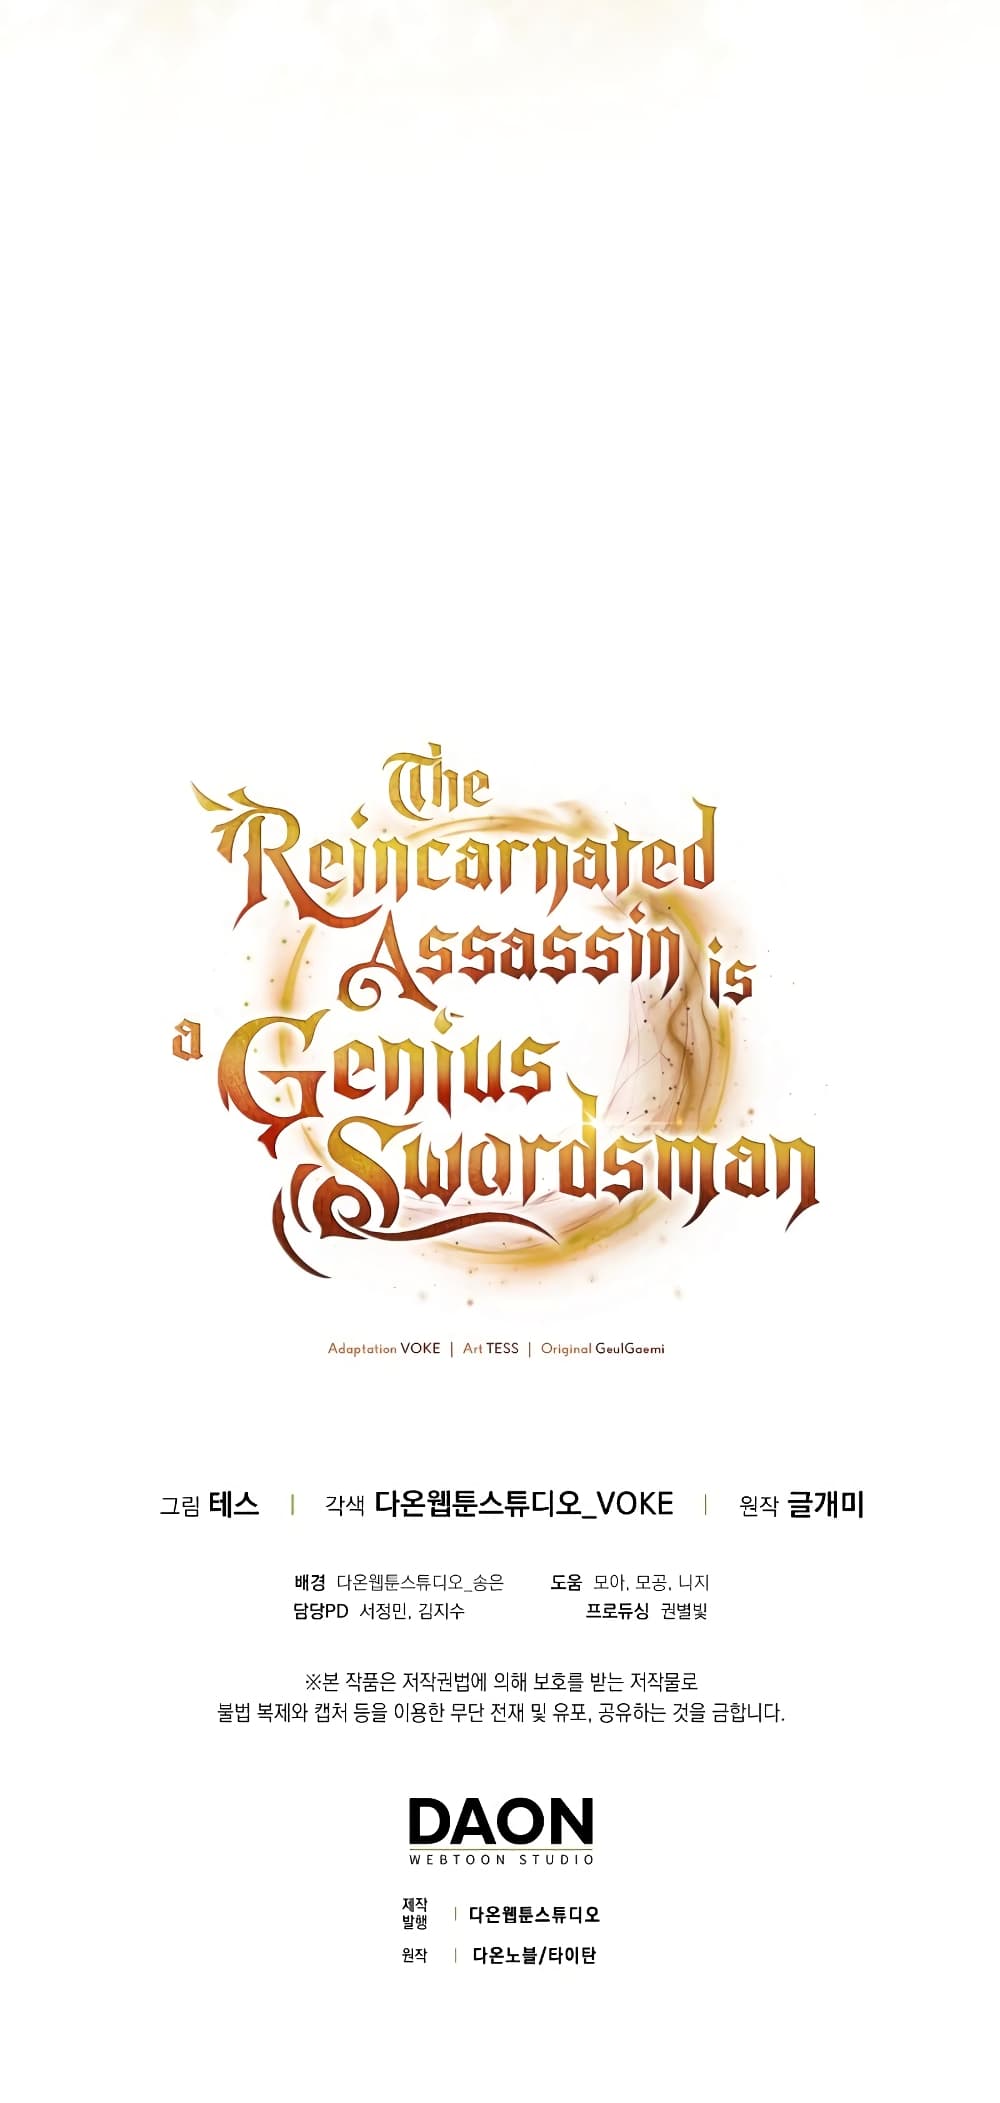 The Reincarnated Assassin is a Genius Swordsman 19-19